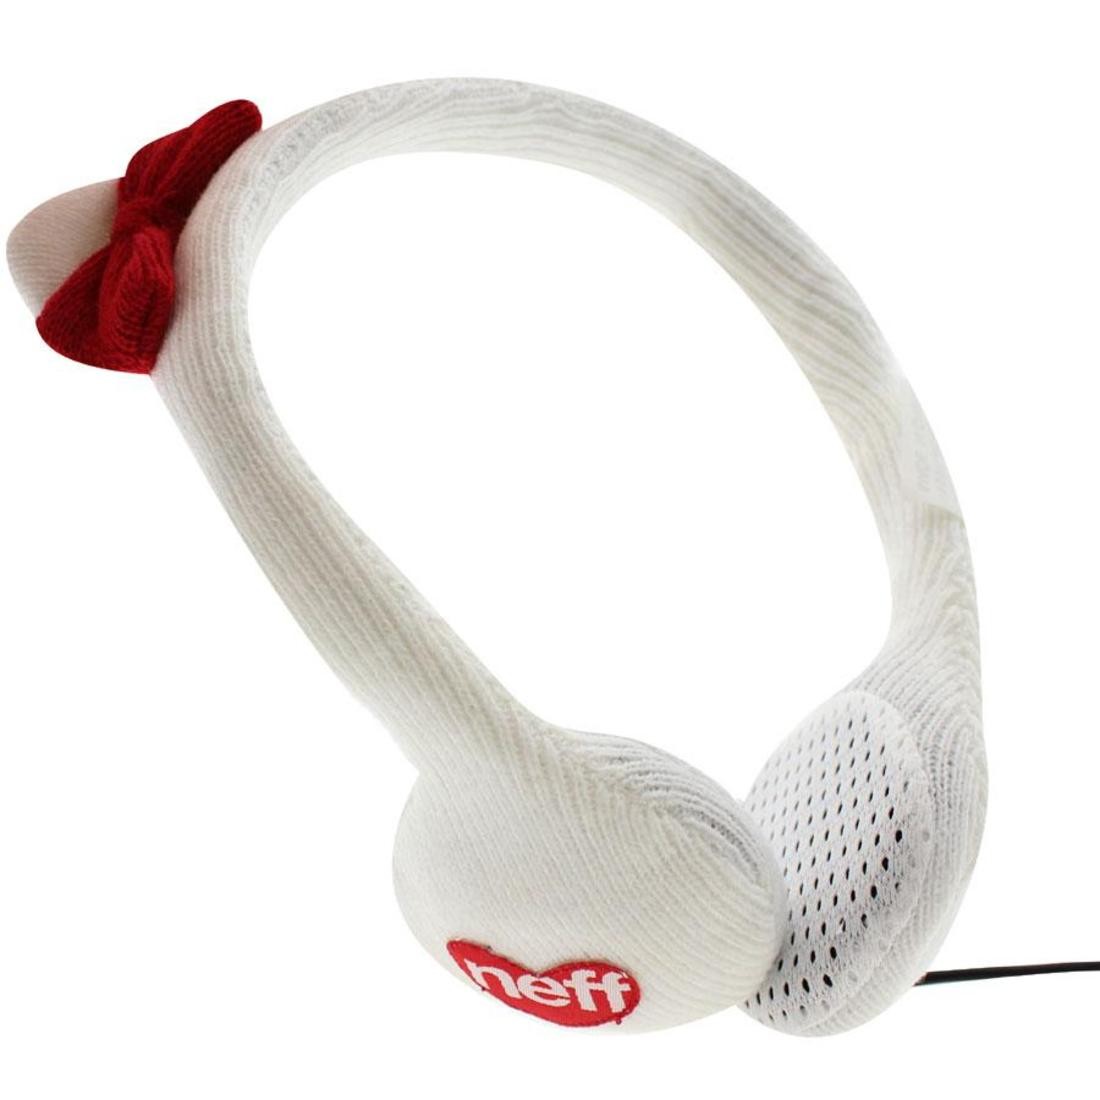 Neff Snowcat Animal Headphone (white)